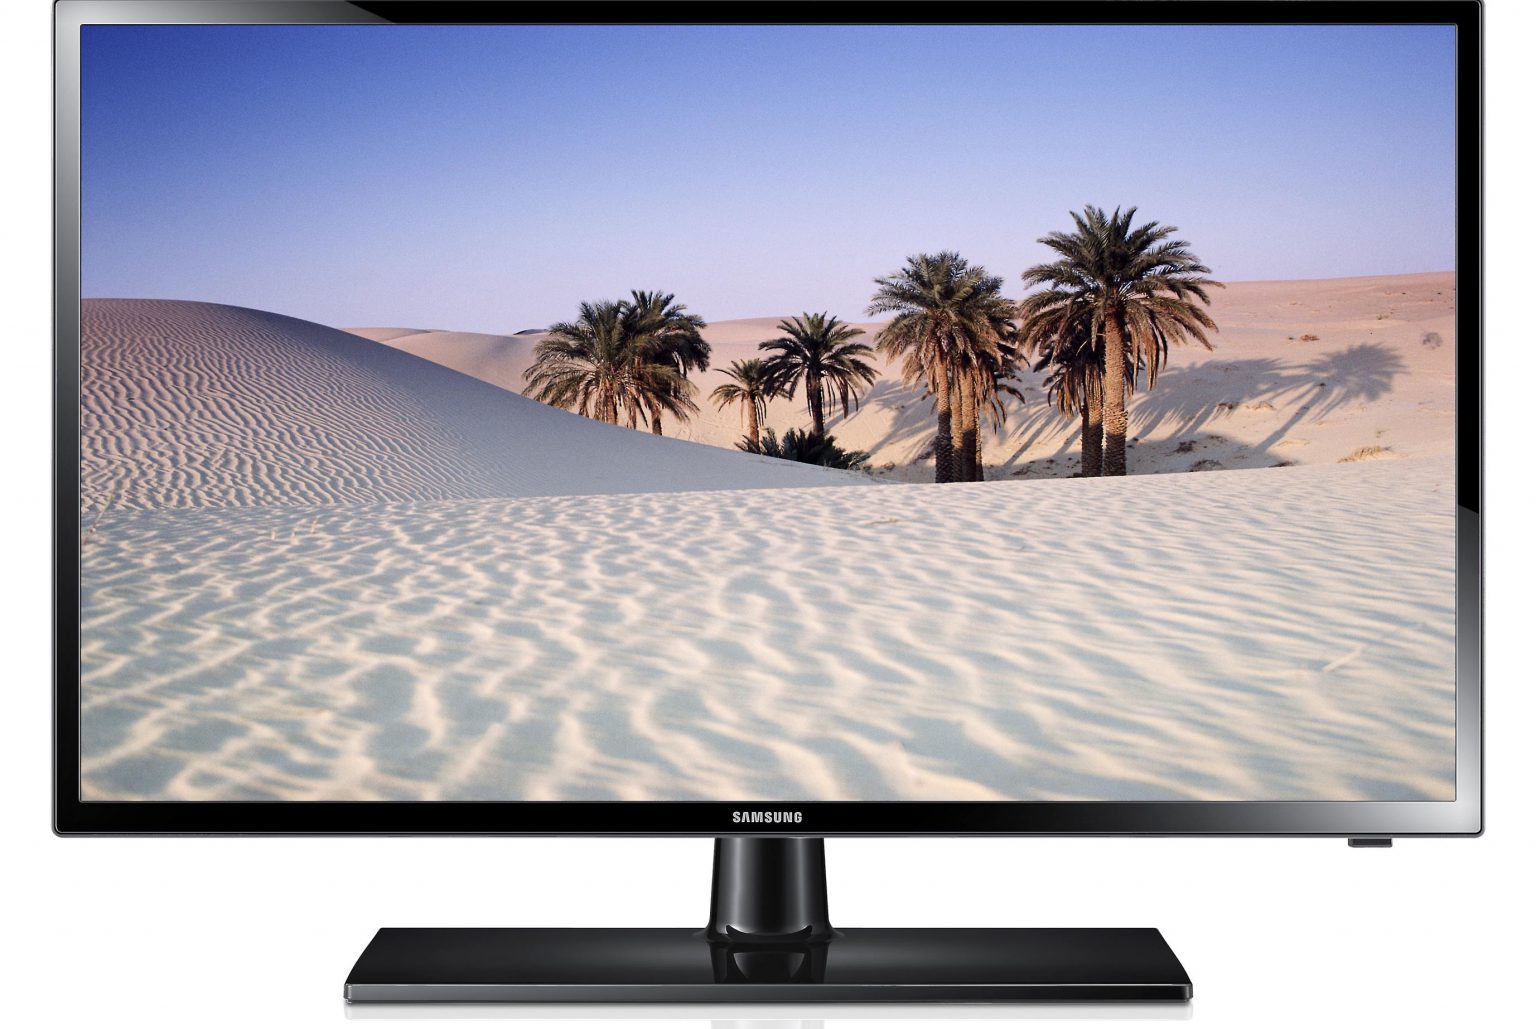 Samsung UN19F4000 19 Inch 720p LED TV 1 1536x1029 